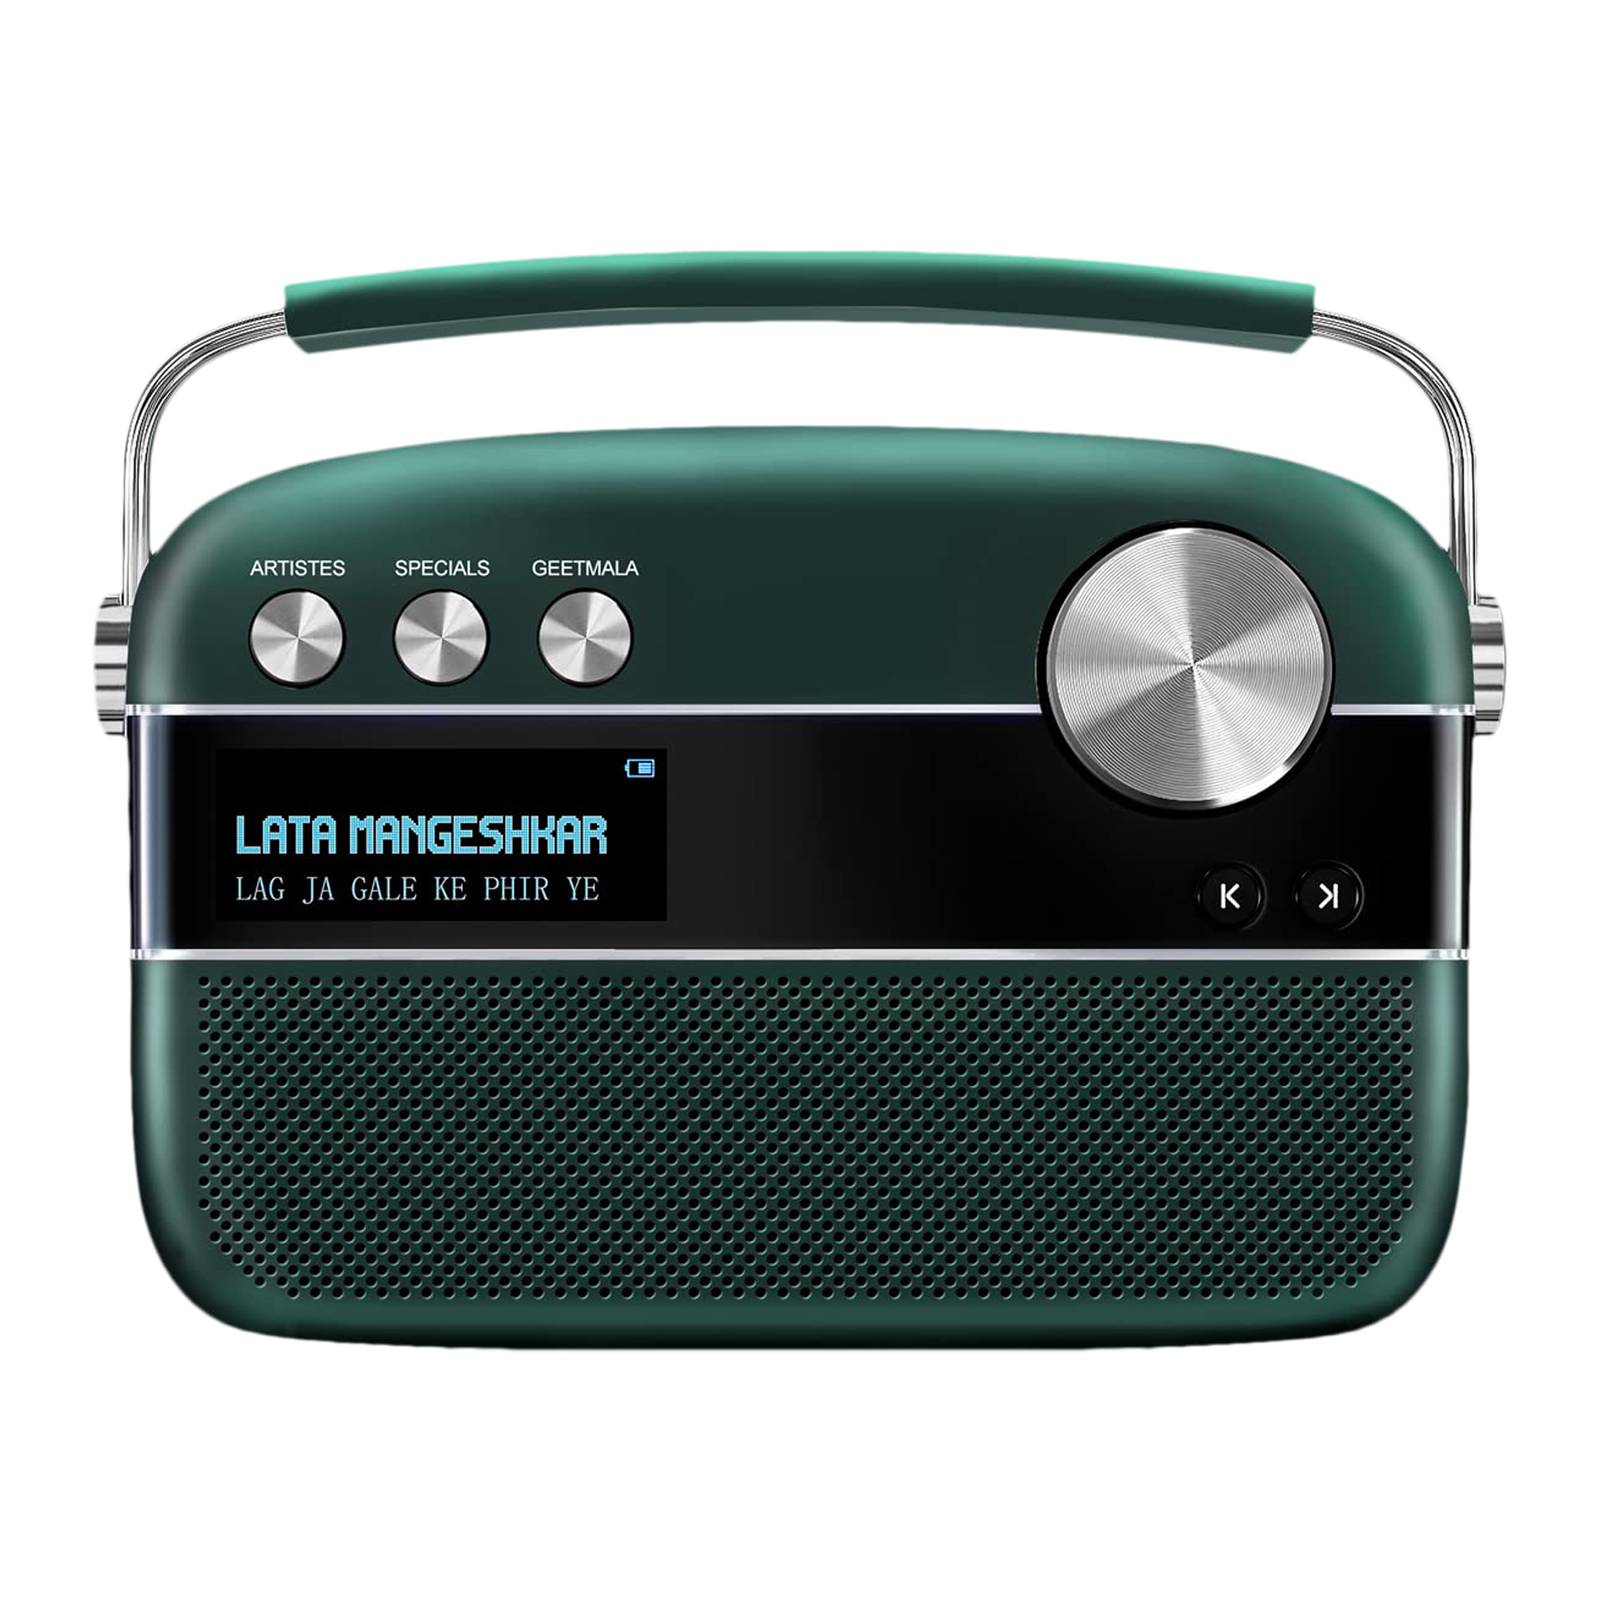 SAREGAMA Carvaan Premium Hindi 10W Portable Bluetooth Speaker (5 Hours Playtime, 2.0 Channel, Emerald Green)